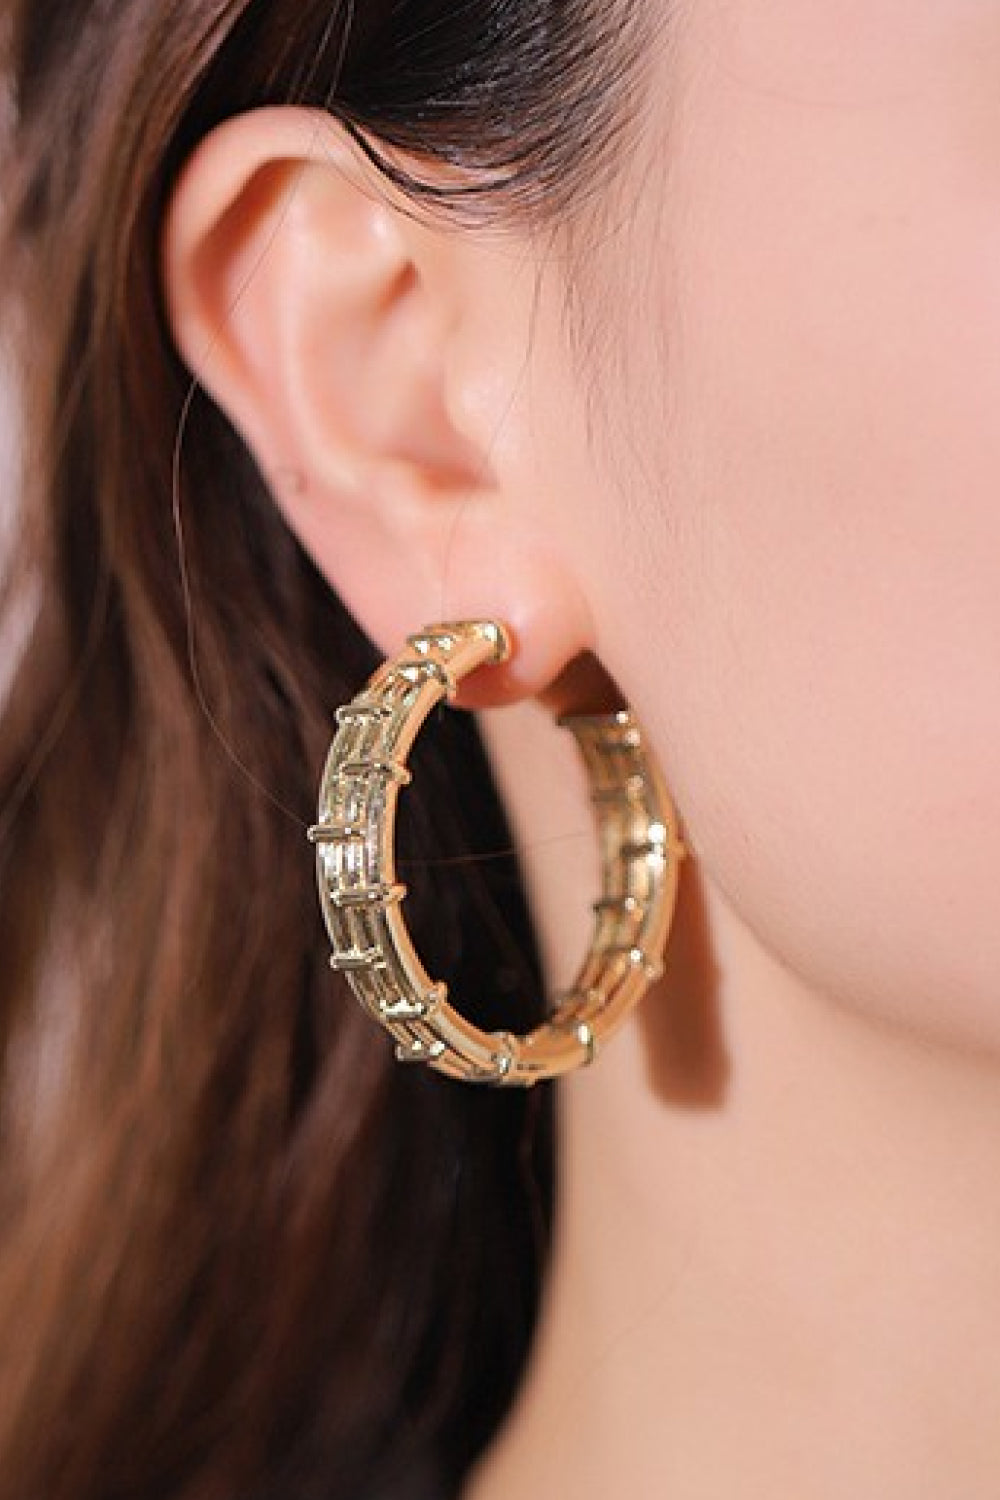 18K Gold-Plated Alloy C-Hoop Earrings